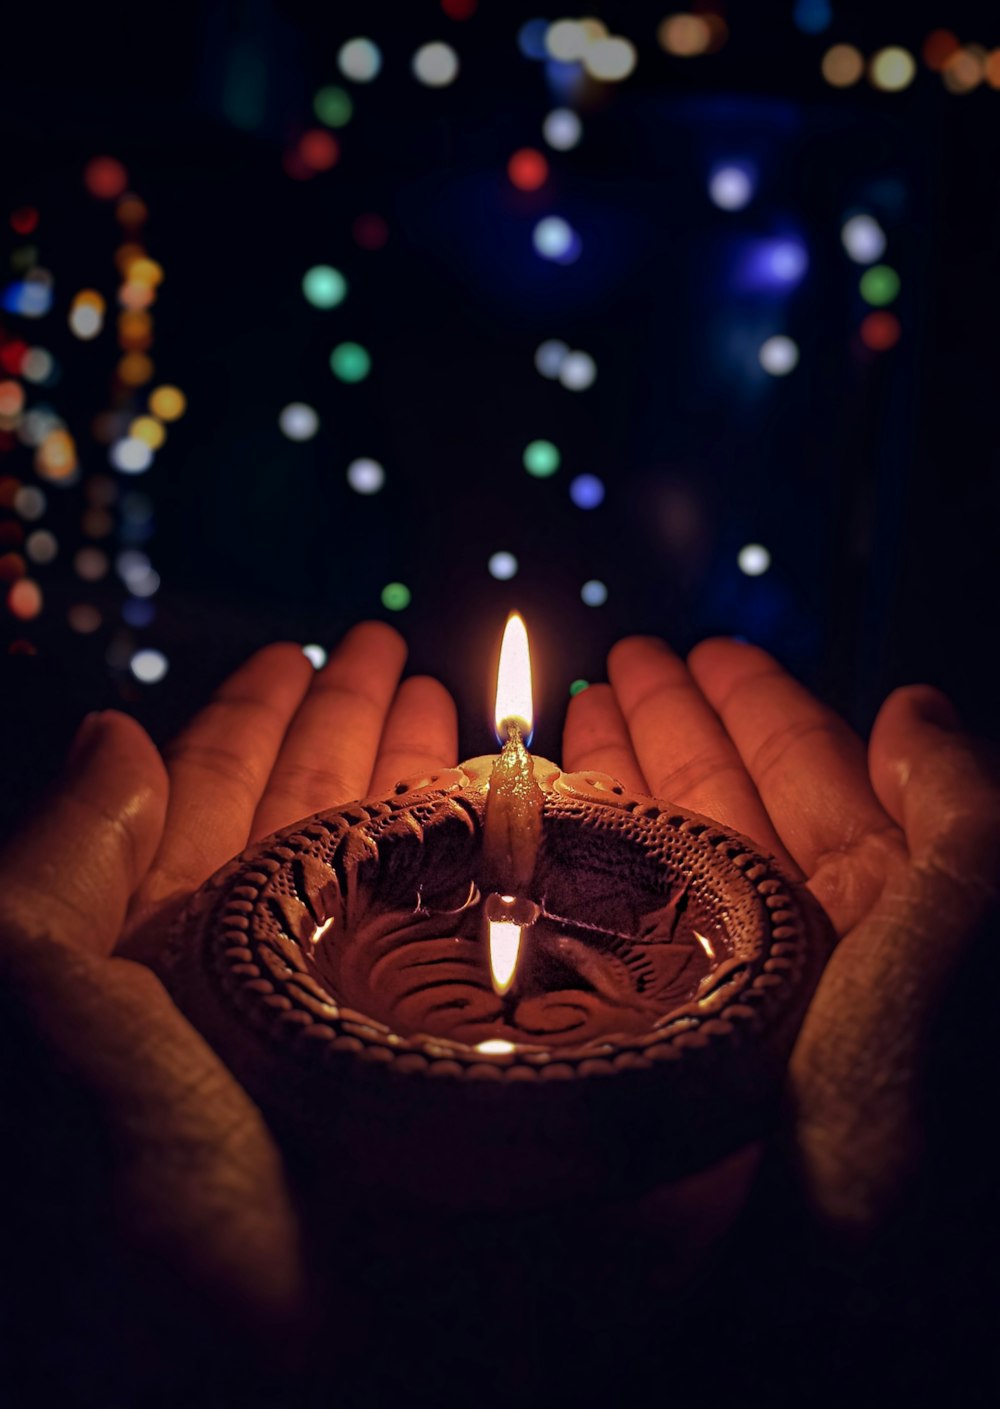 350+ Diwali Pictures | Download Free Images on Unsplash